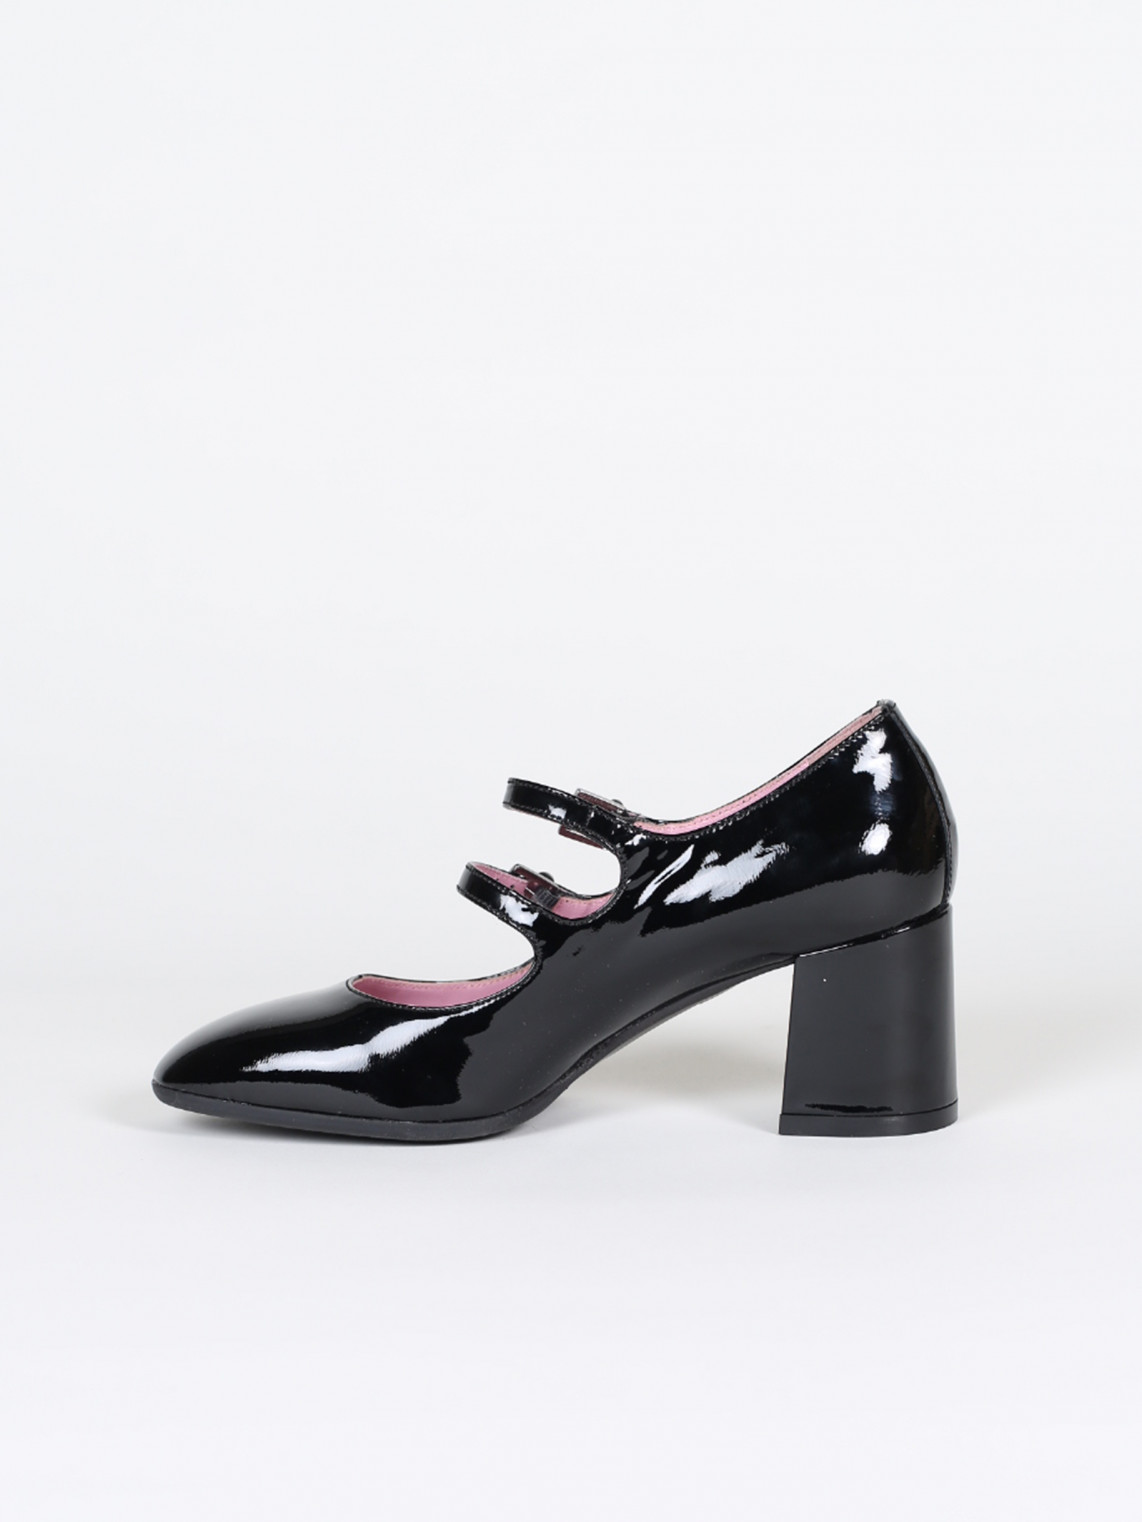 ALICE black patent leather Mary Janes | Carel Paris Shoes